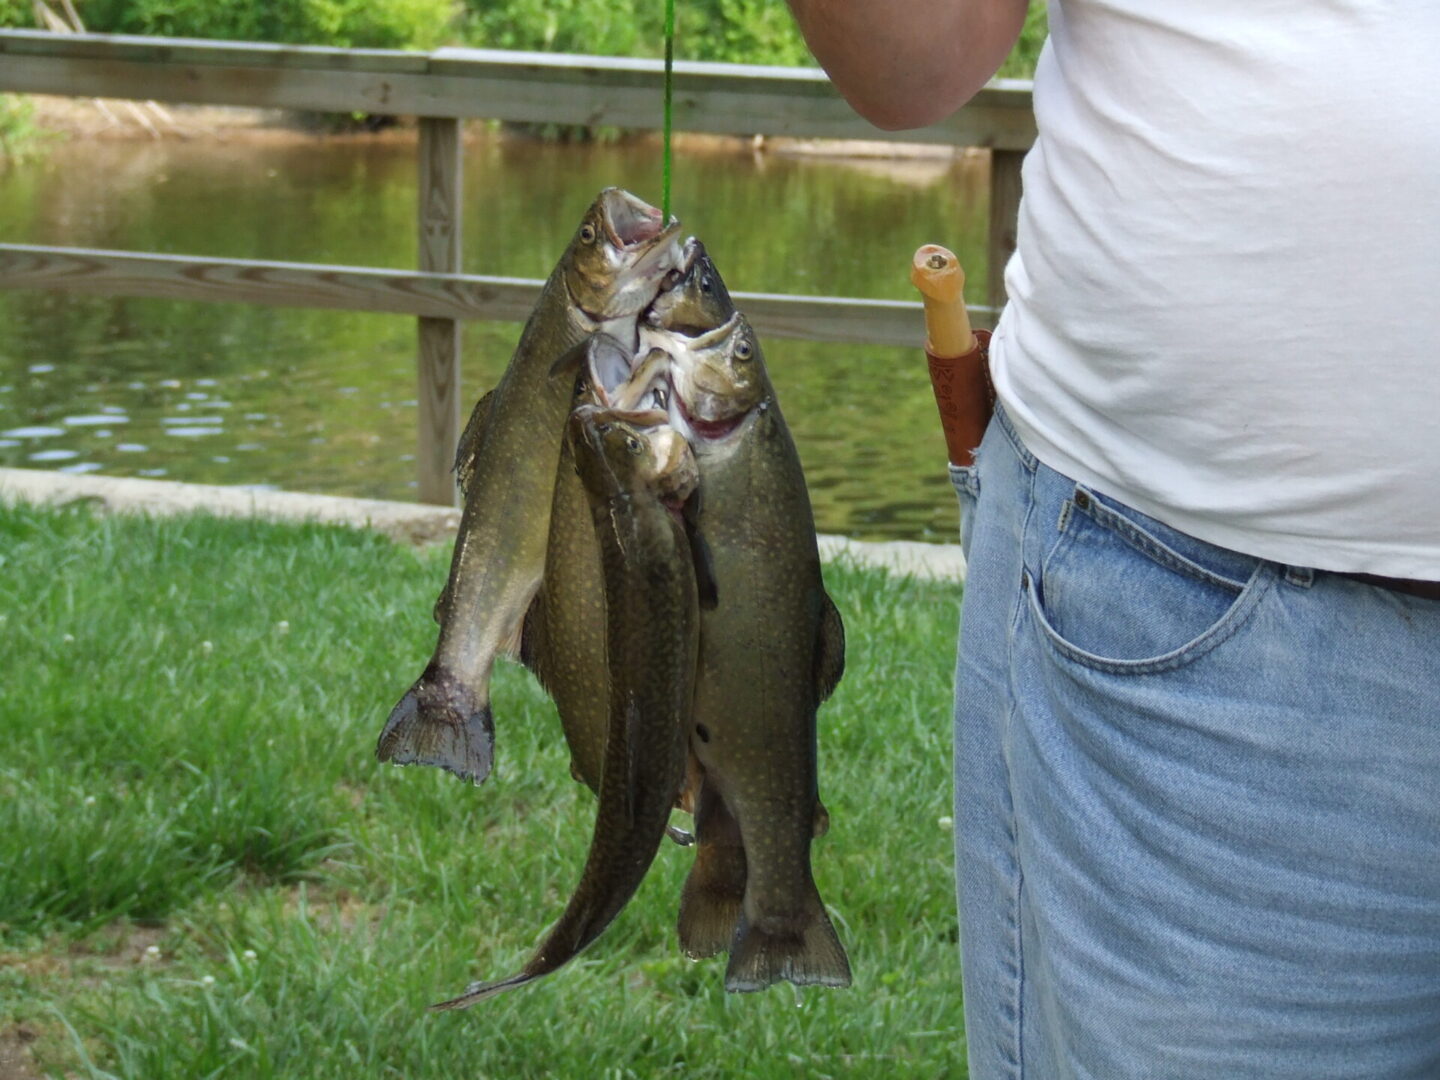 A bunch of bass caught through fishing